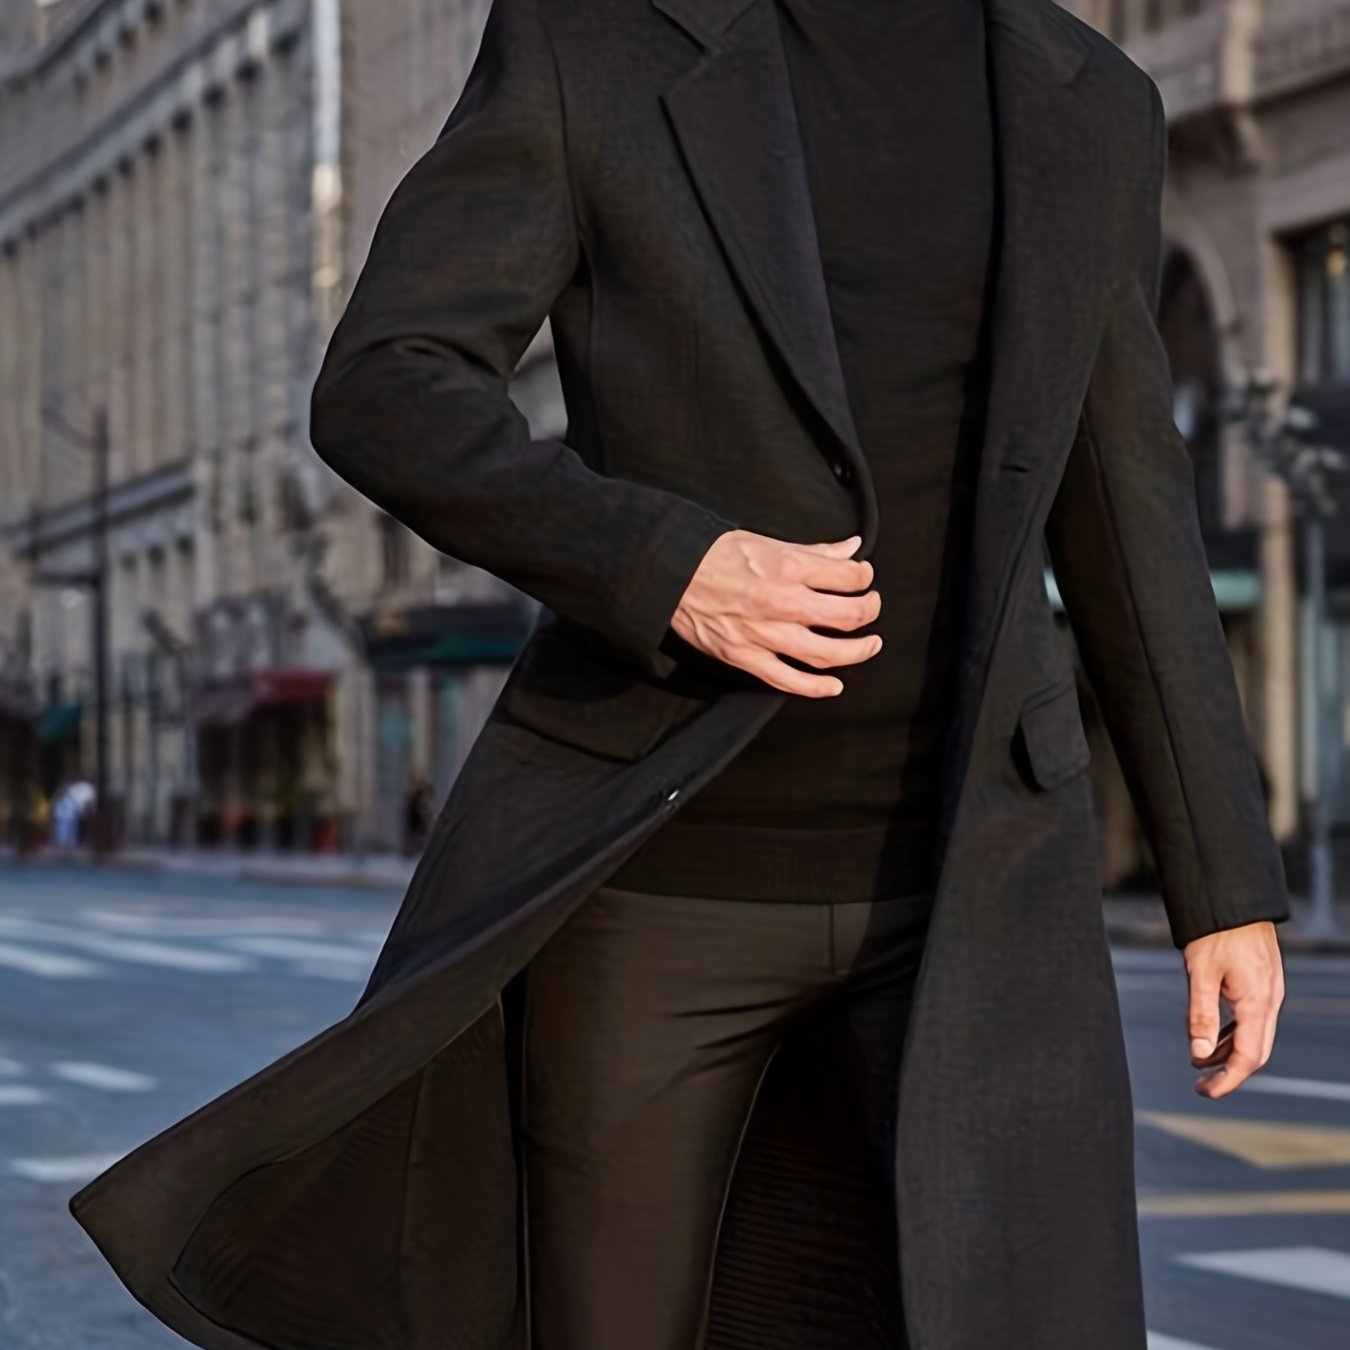 Foruwish - Elegant Retro Trench Coat, Men's Semi-formal Single Breasted Lapel Overcoat For Fall Winter Business